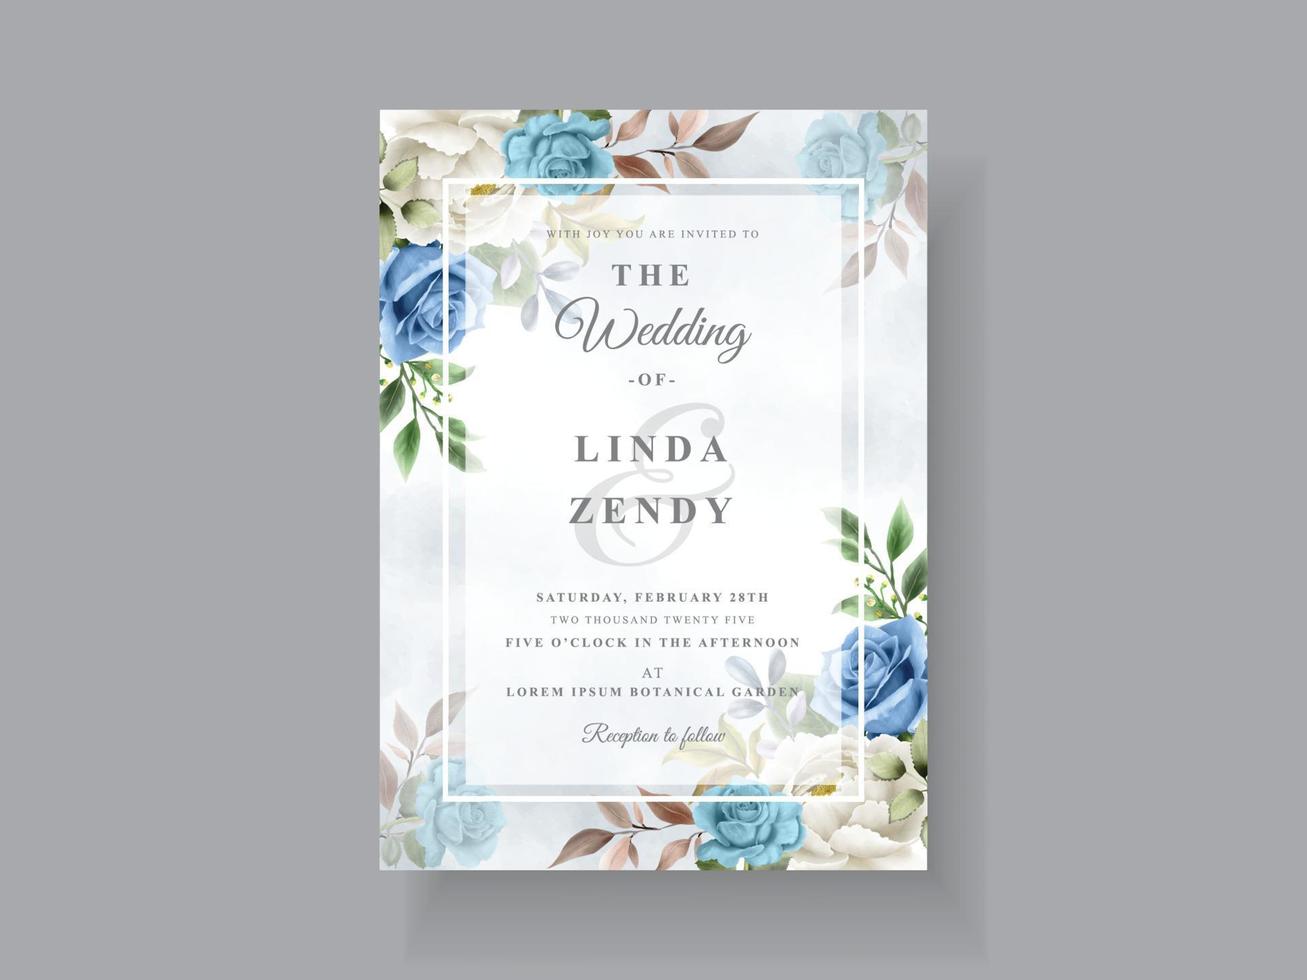 Elegant white and blue rose wedding card vector